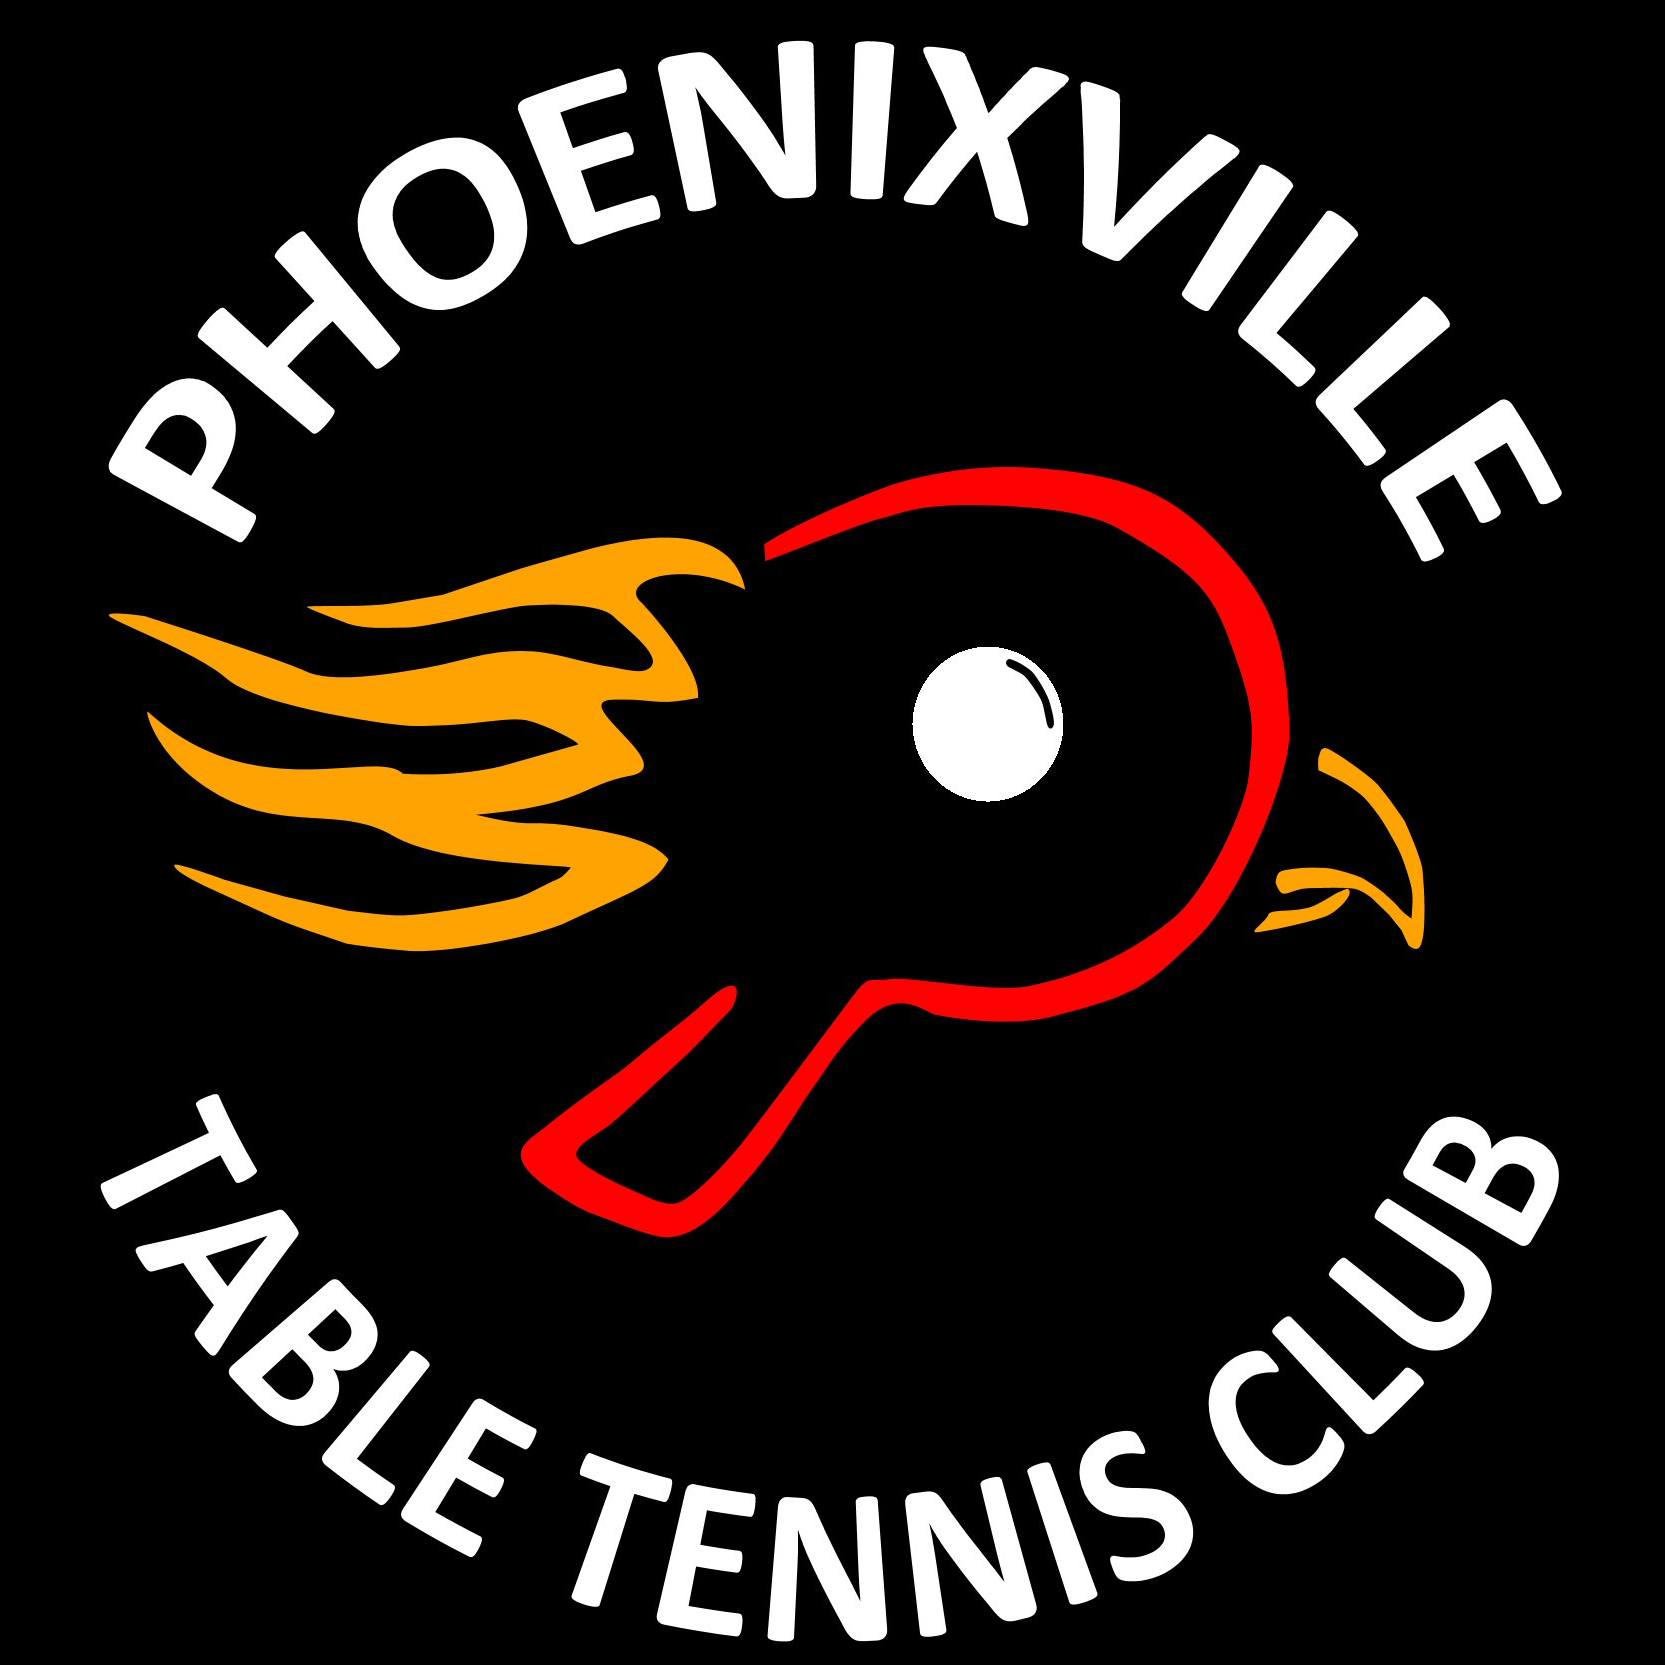 Phoenixville Table Tennis Club